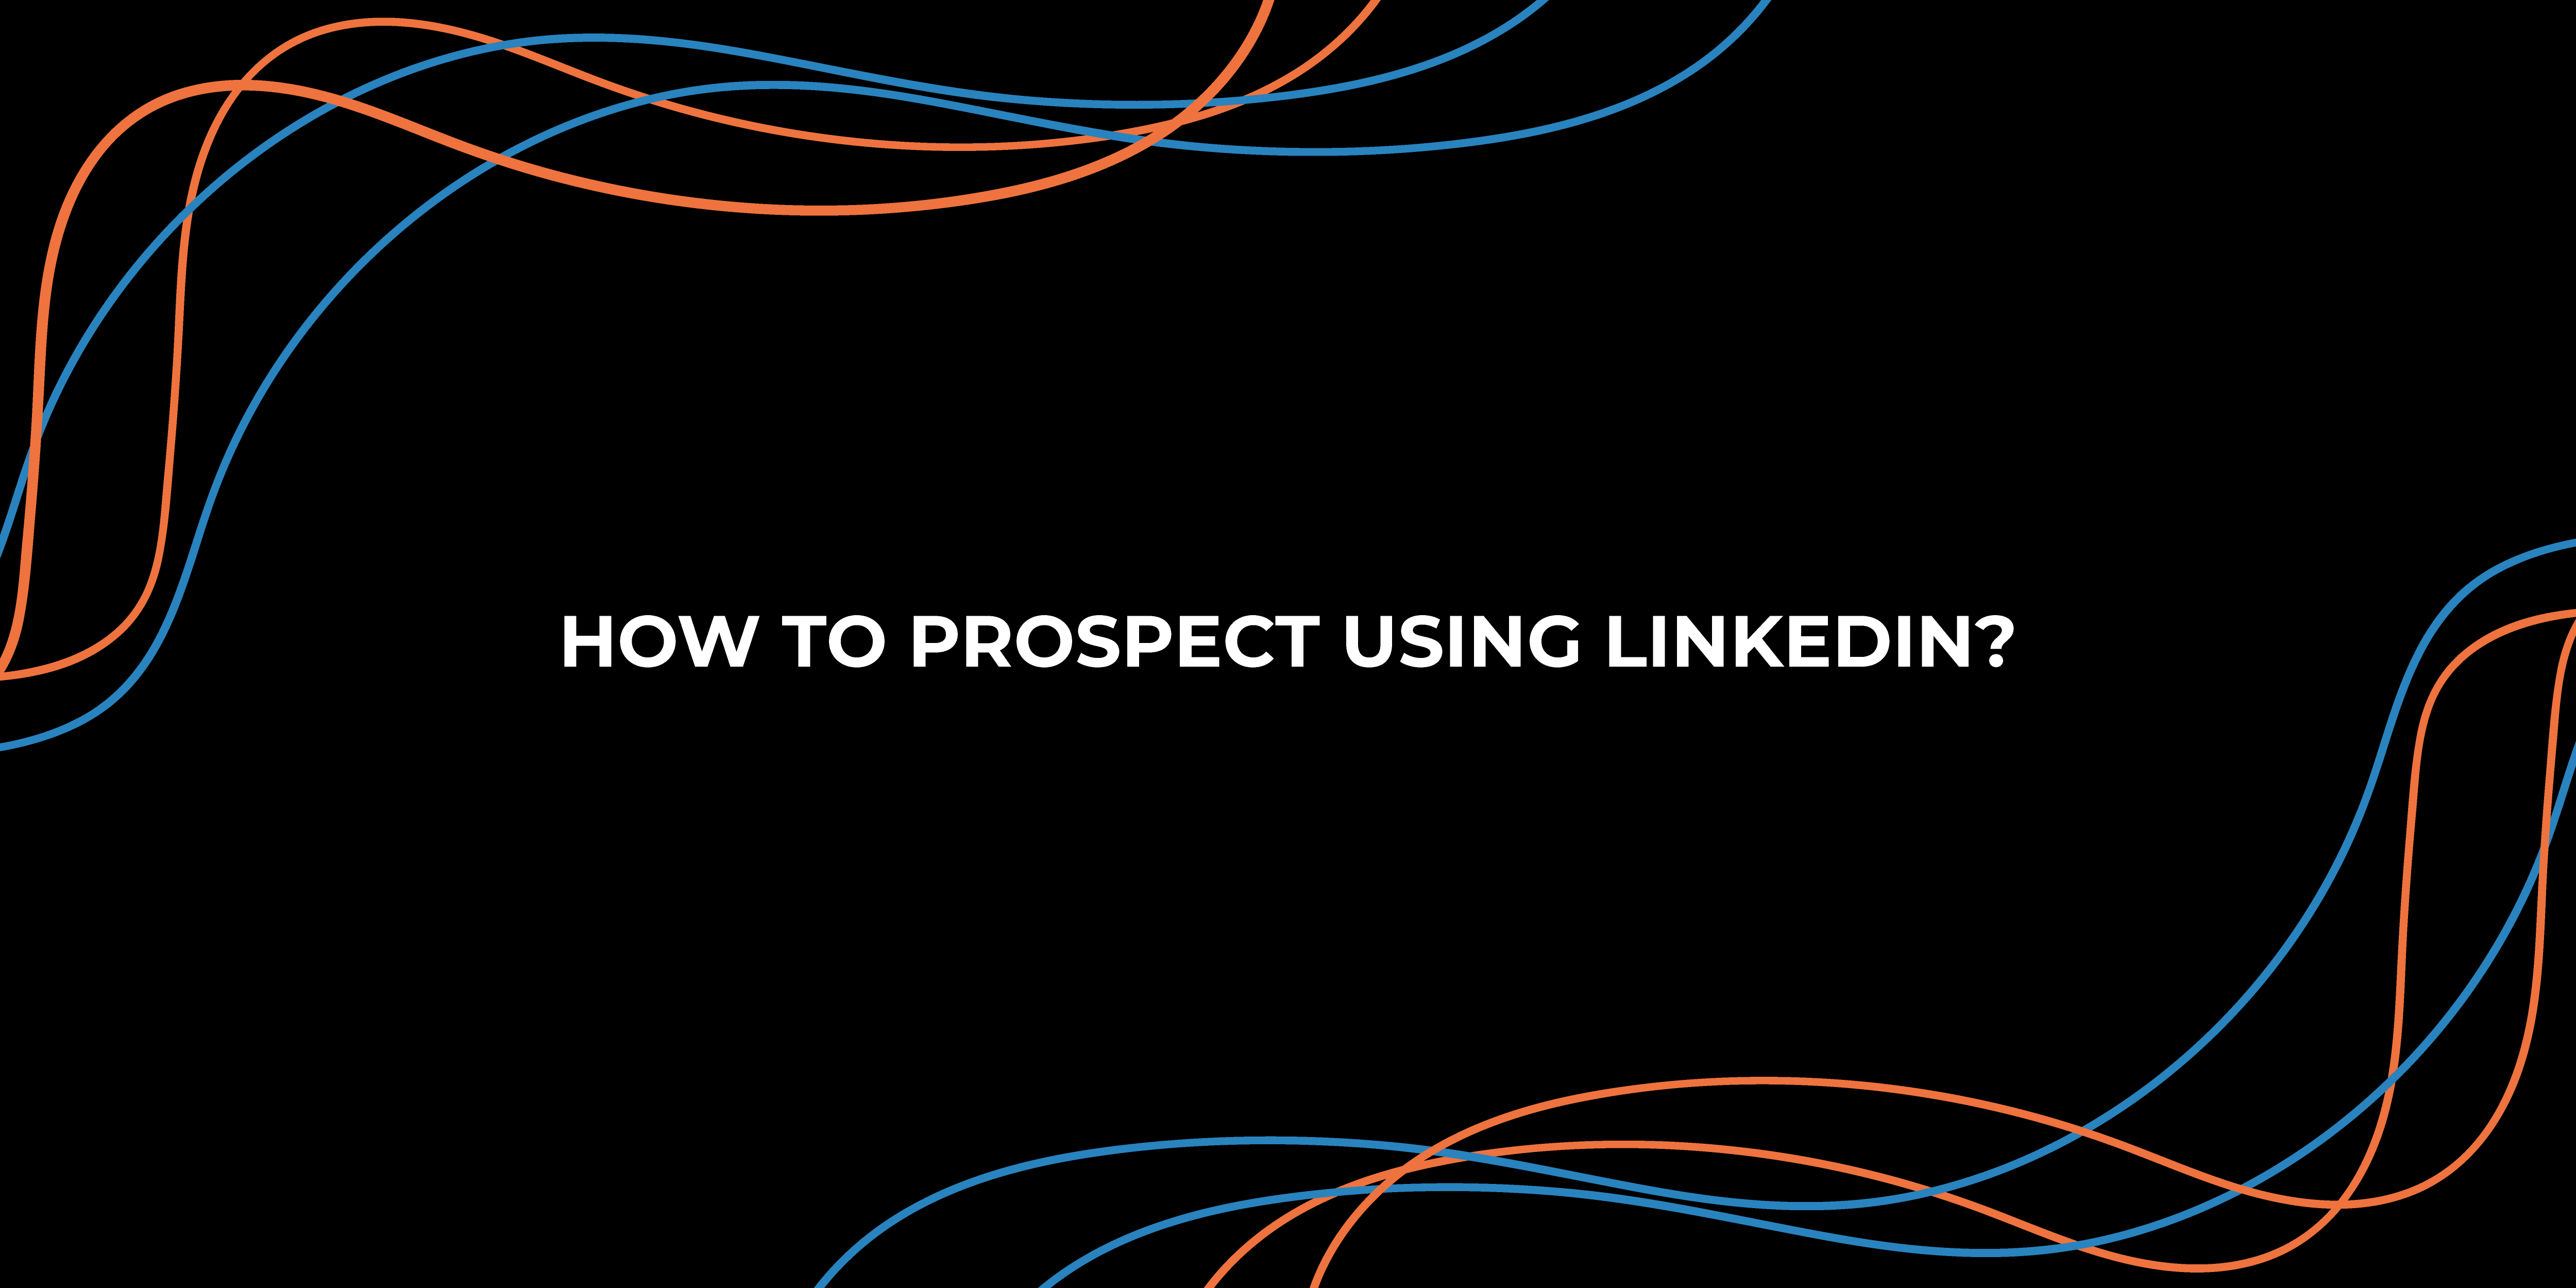 How to prospect using LinkedIn?